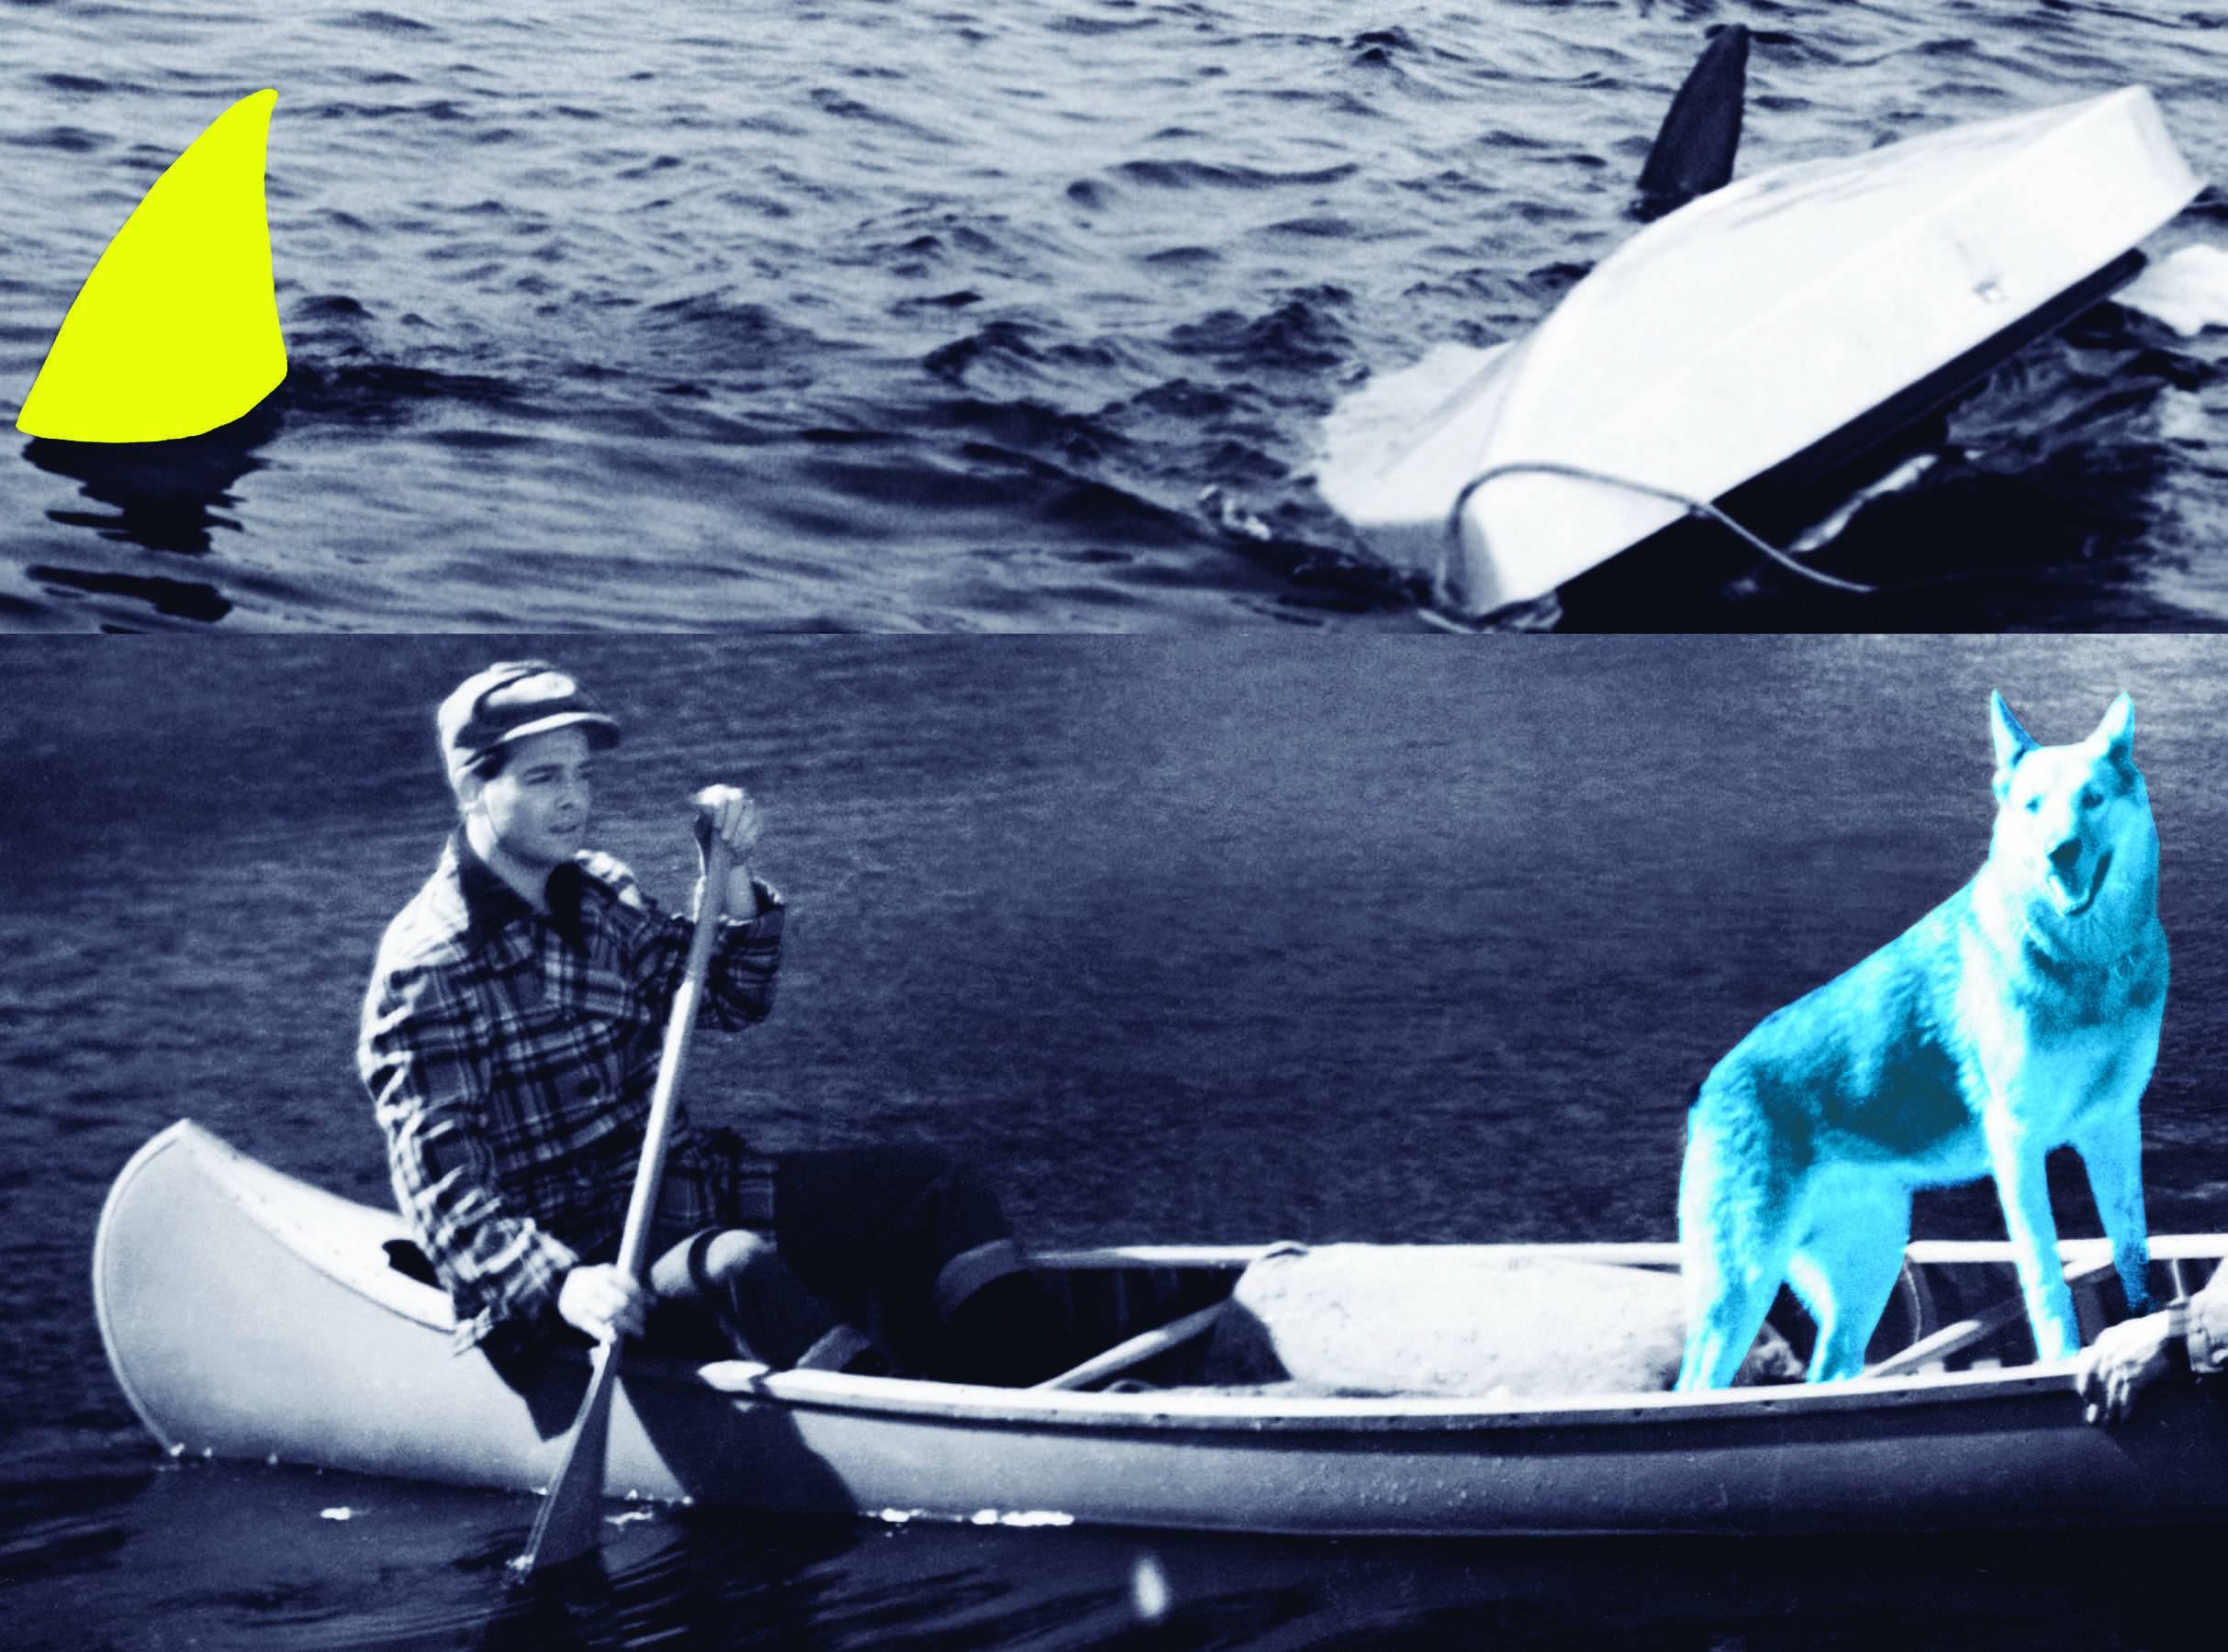 Man, Dog (Blue), Canoe/Shark Fins (One Yellow), Capsized Boat